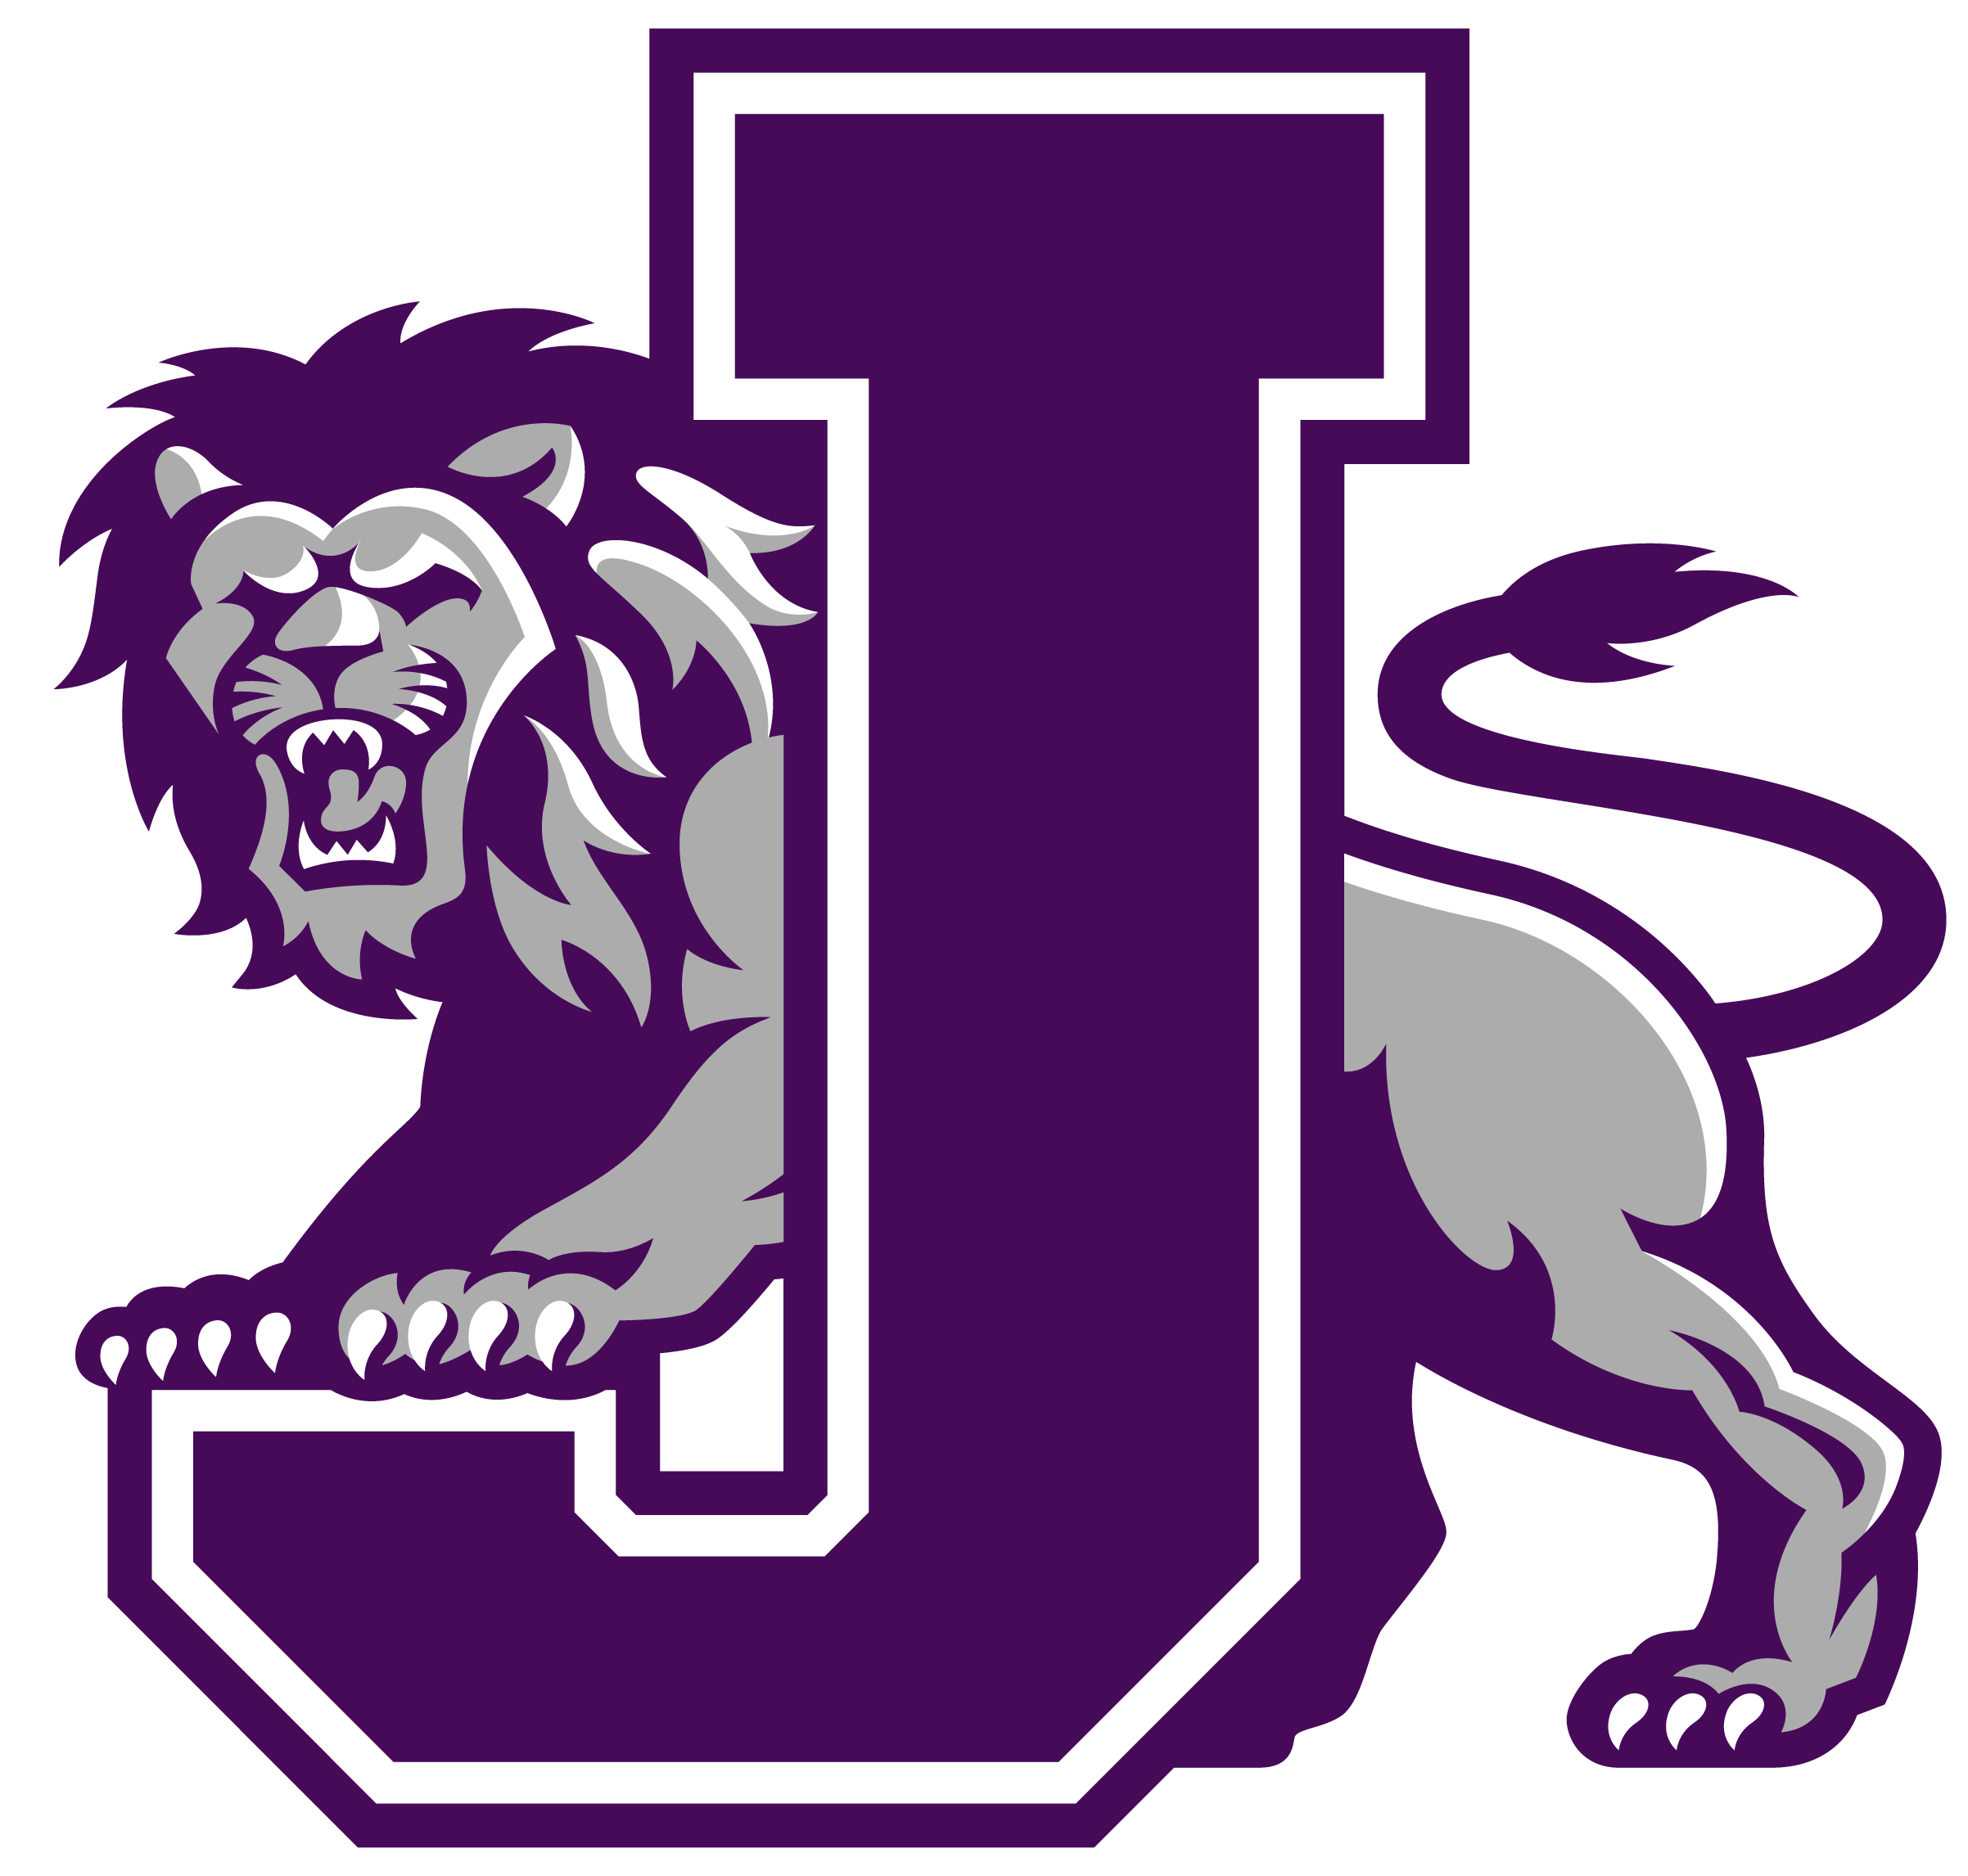 Lion School Logo - ORIGINAL (not copied) High School logos - Page 10 - Sports Logos ...